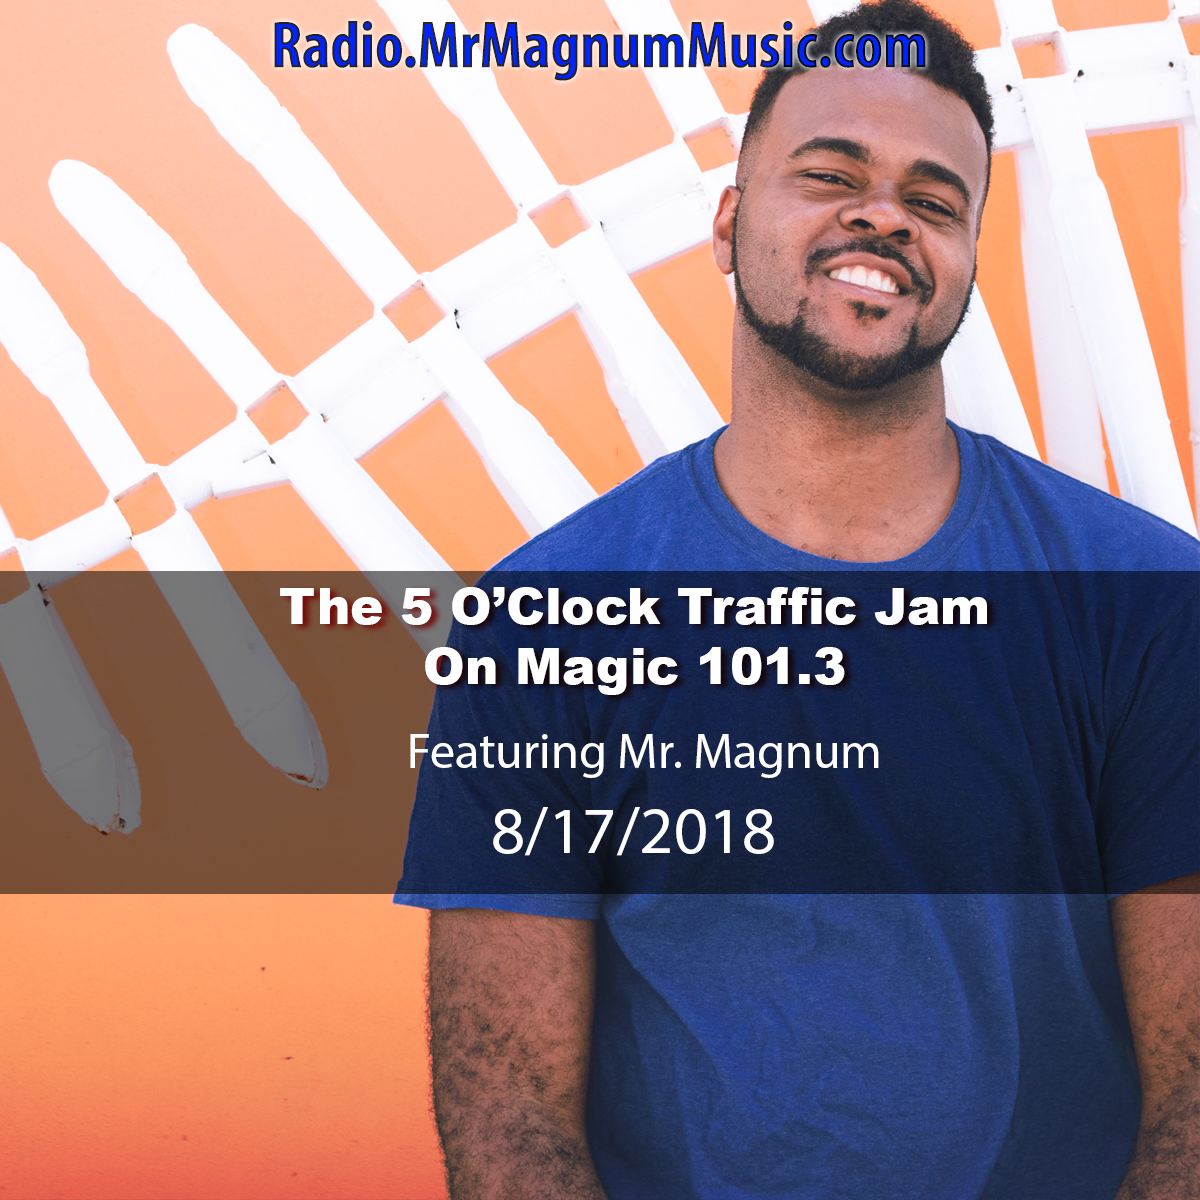 The 5 O'Clock Traffic Jam 20180817 featuring Gainesville's #1 DJ, Mr. Magnum on Magic 101.3